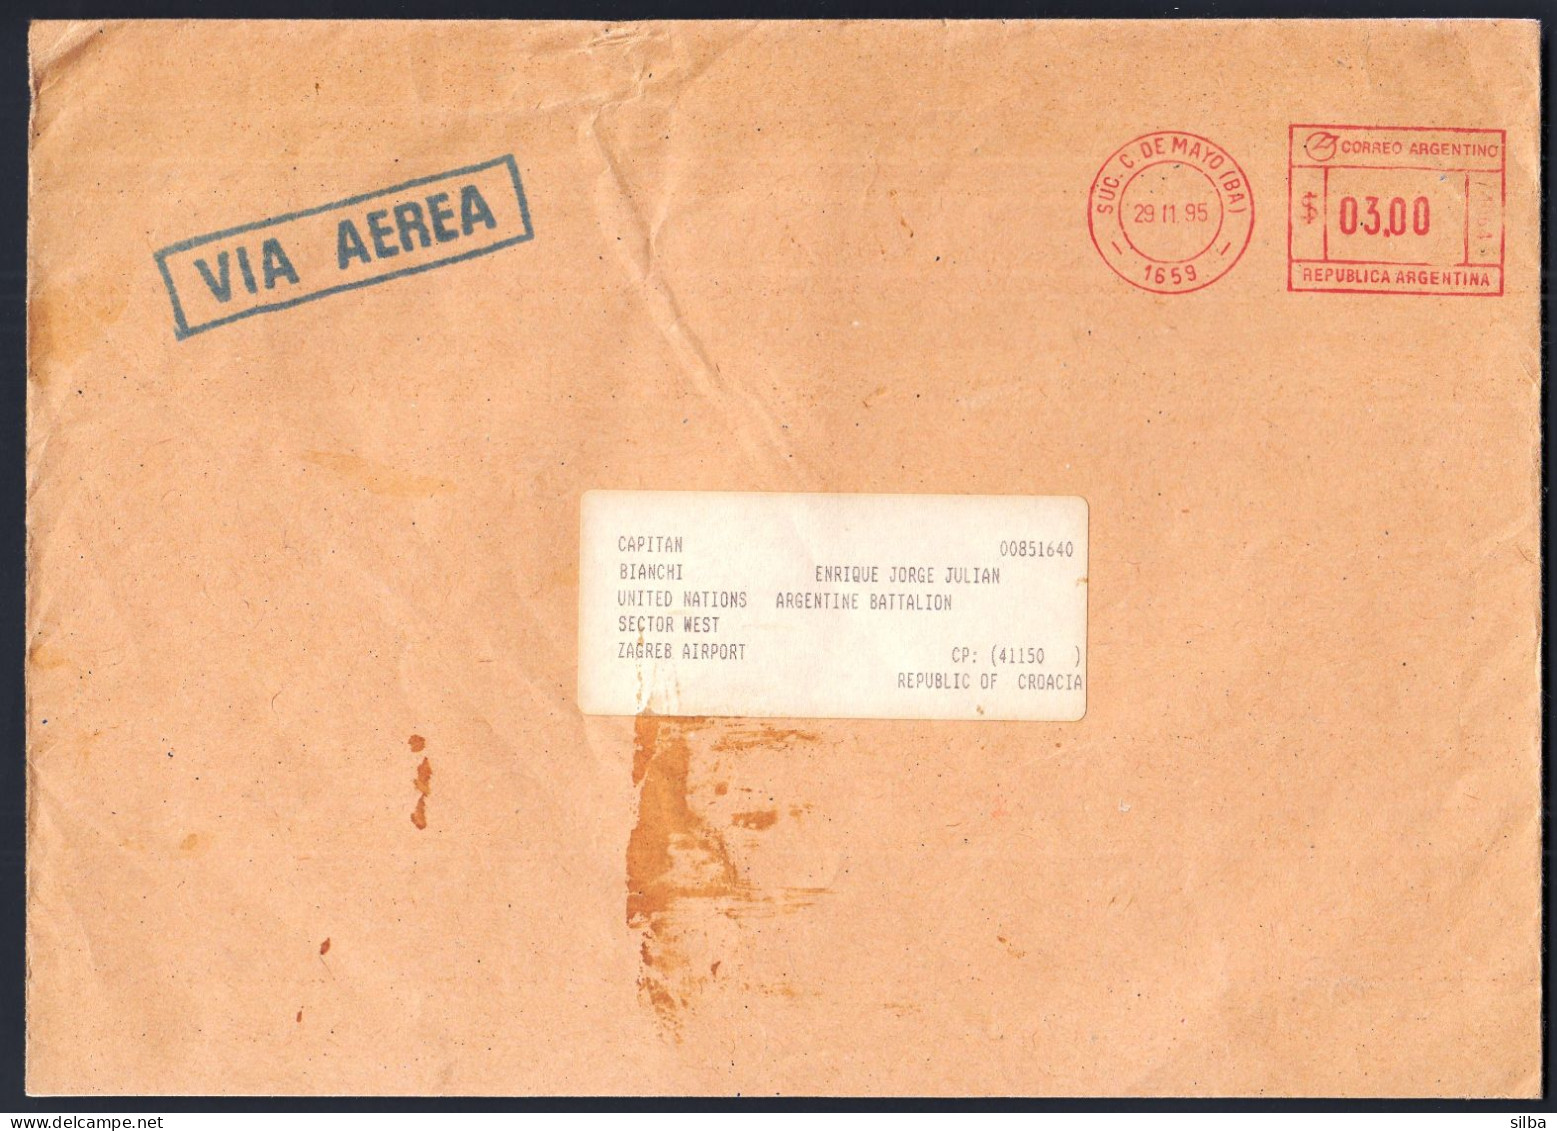 Argentina Suc. C. De Mayo 1995, Machine Stamp / Letter Sent To Croatia, UN Argentine Battalion Sector West - Briefe U. Dokumente